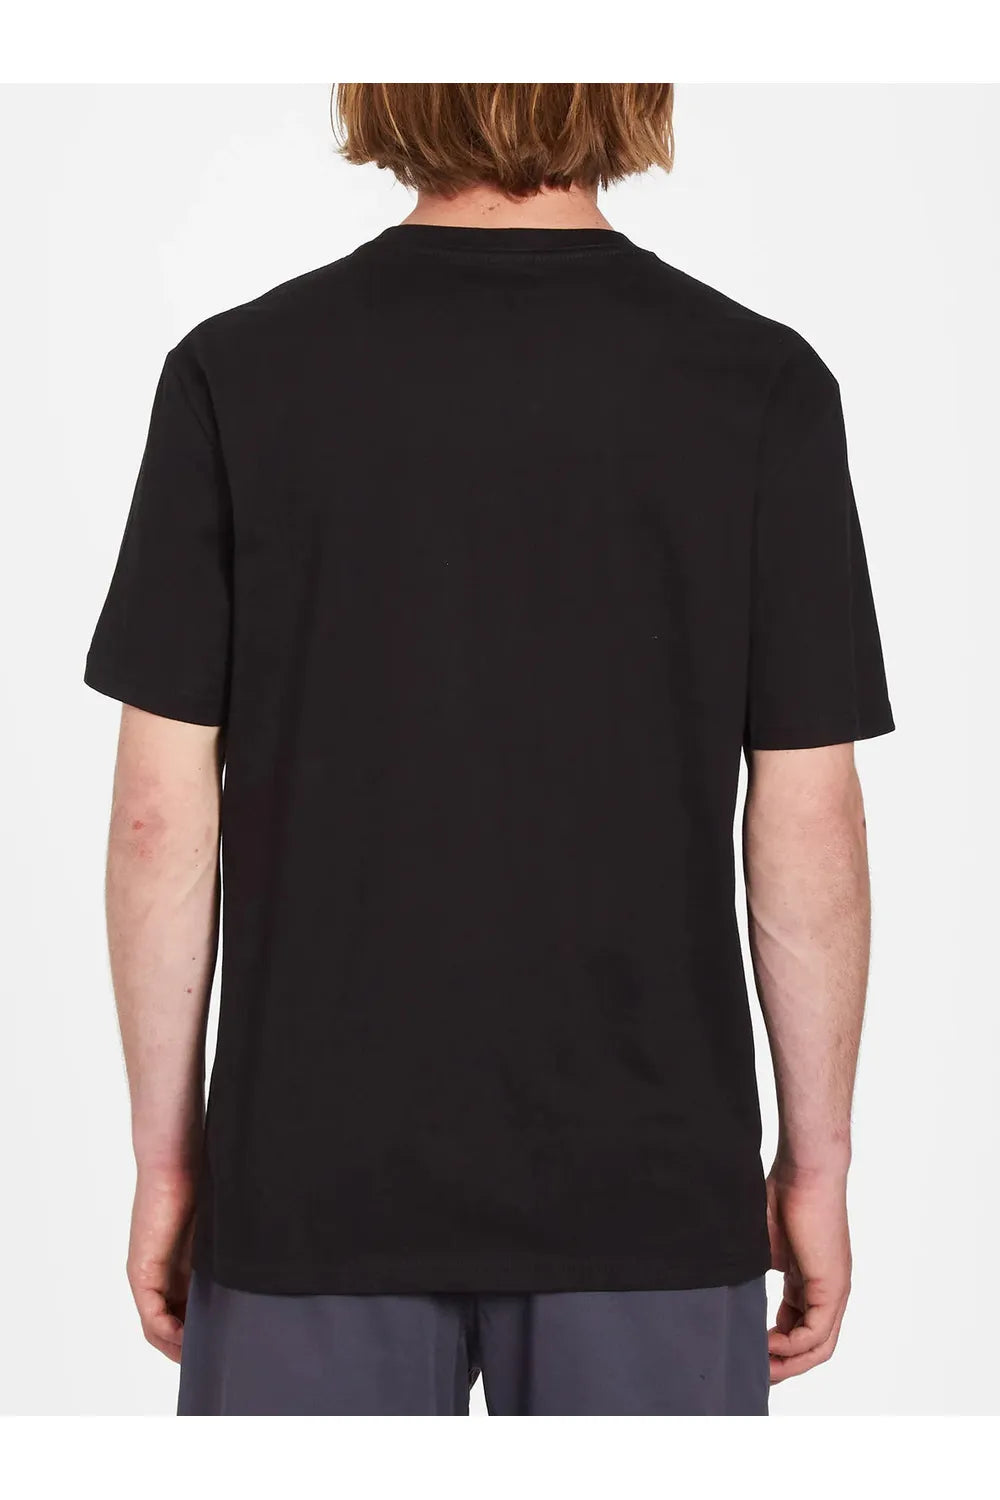 Volcom Stone Blanks Bsc Short Sleeve T-Shirt